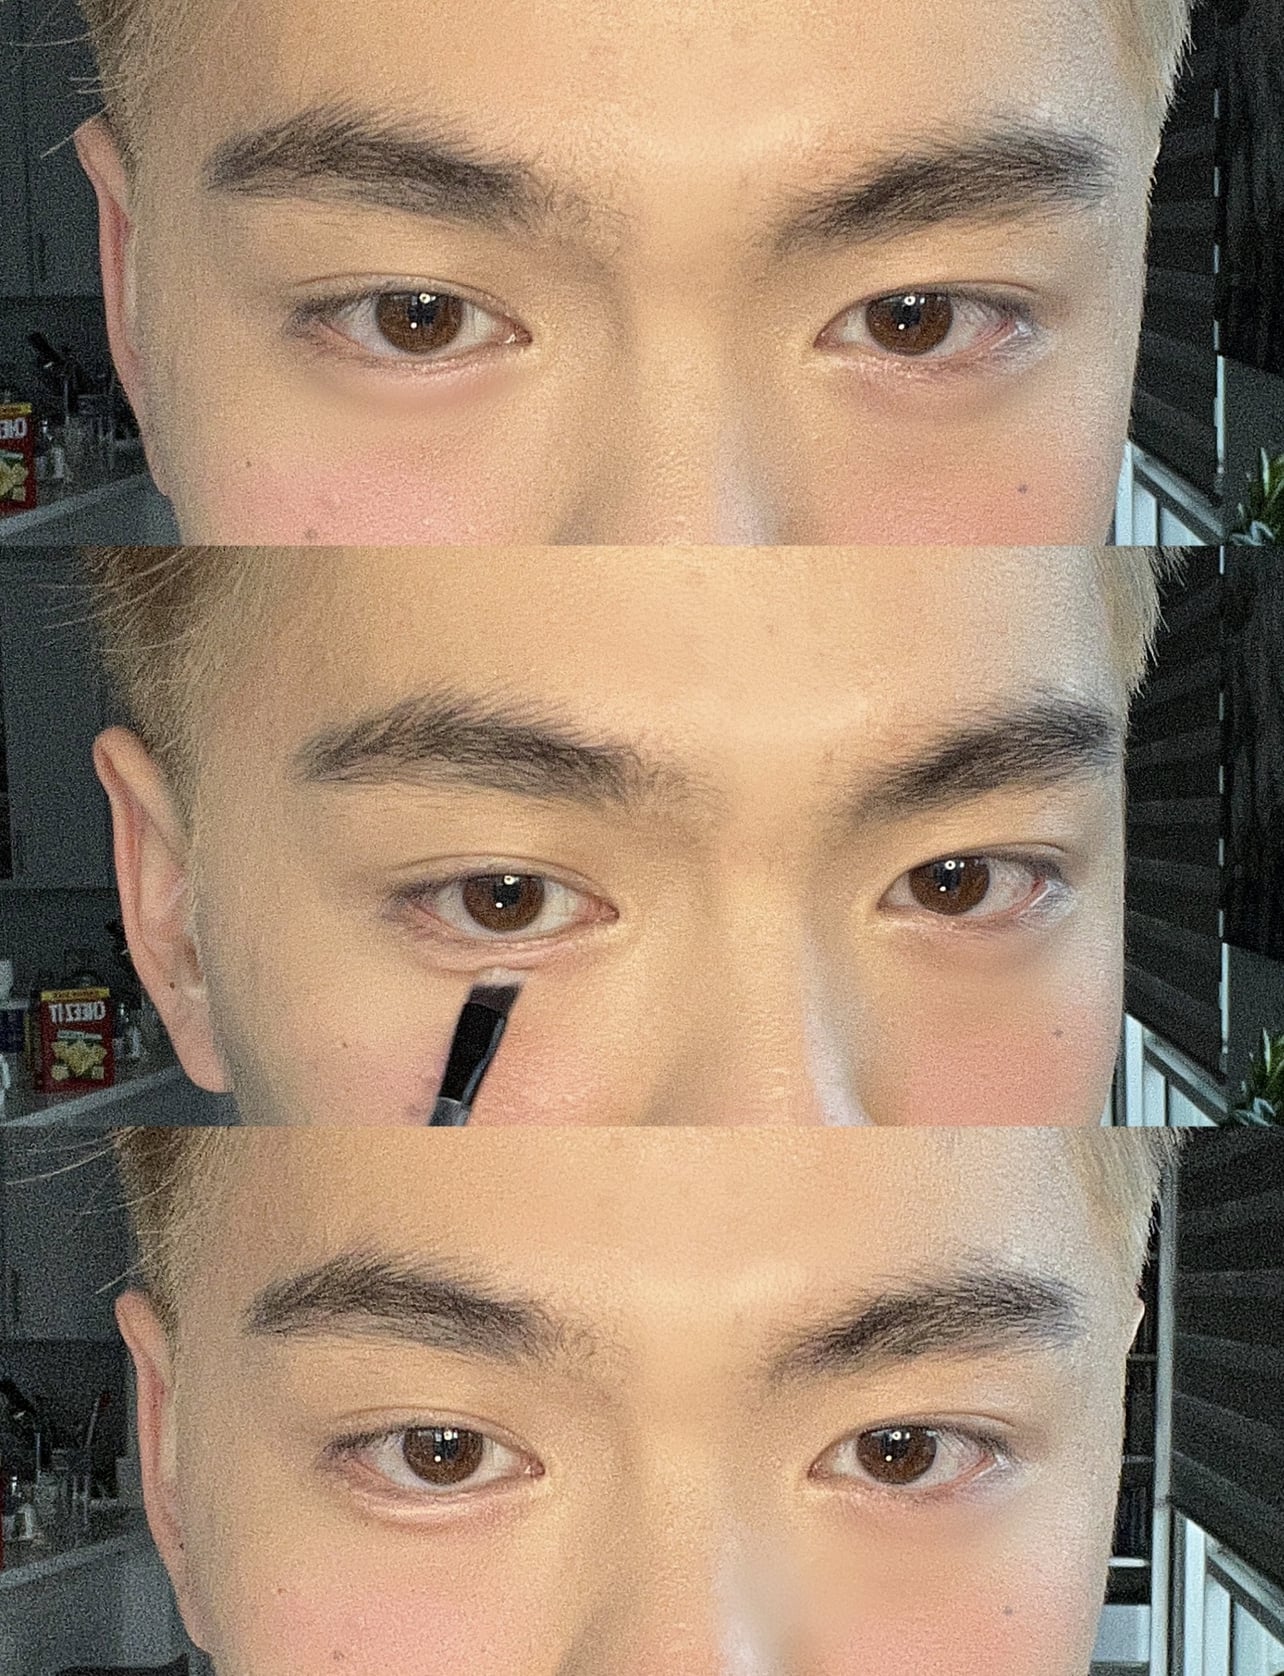 Тестирование хака для глаз тутового шелкопряда от Xiaohongshu.